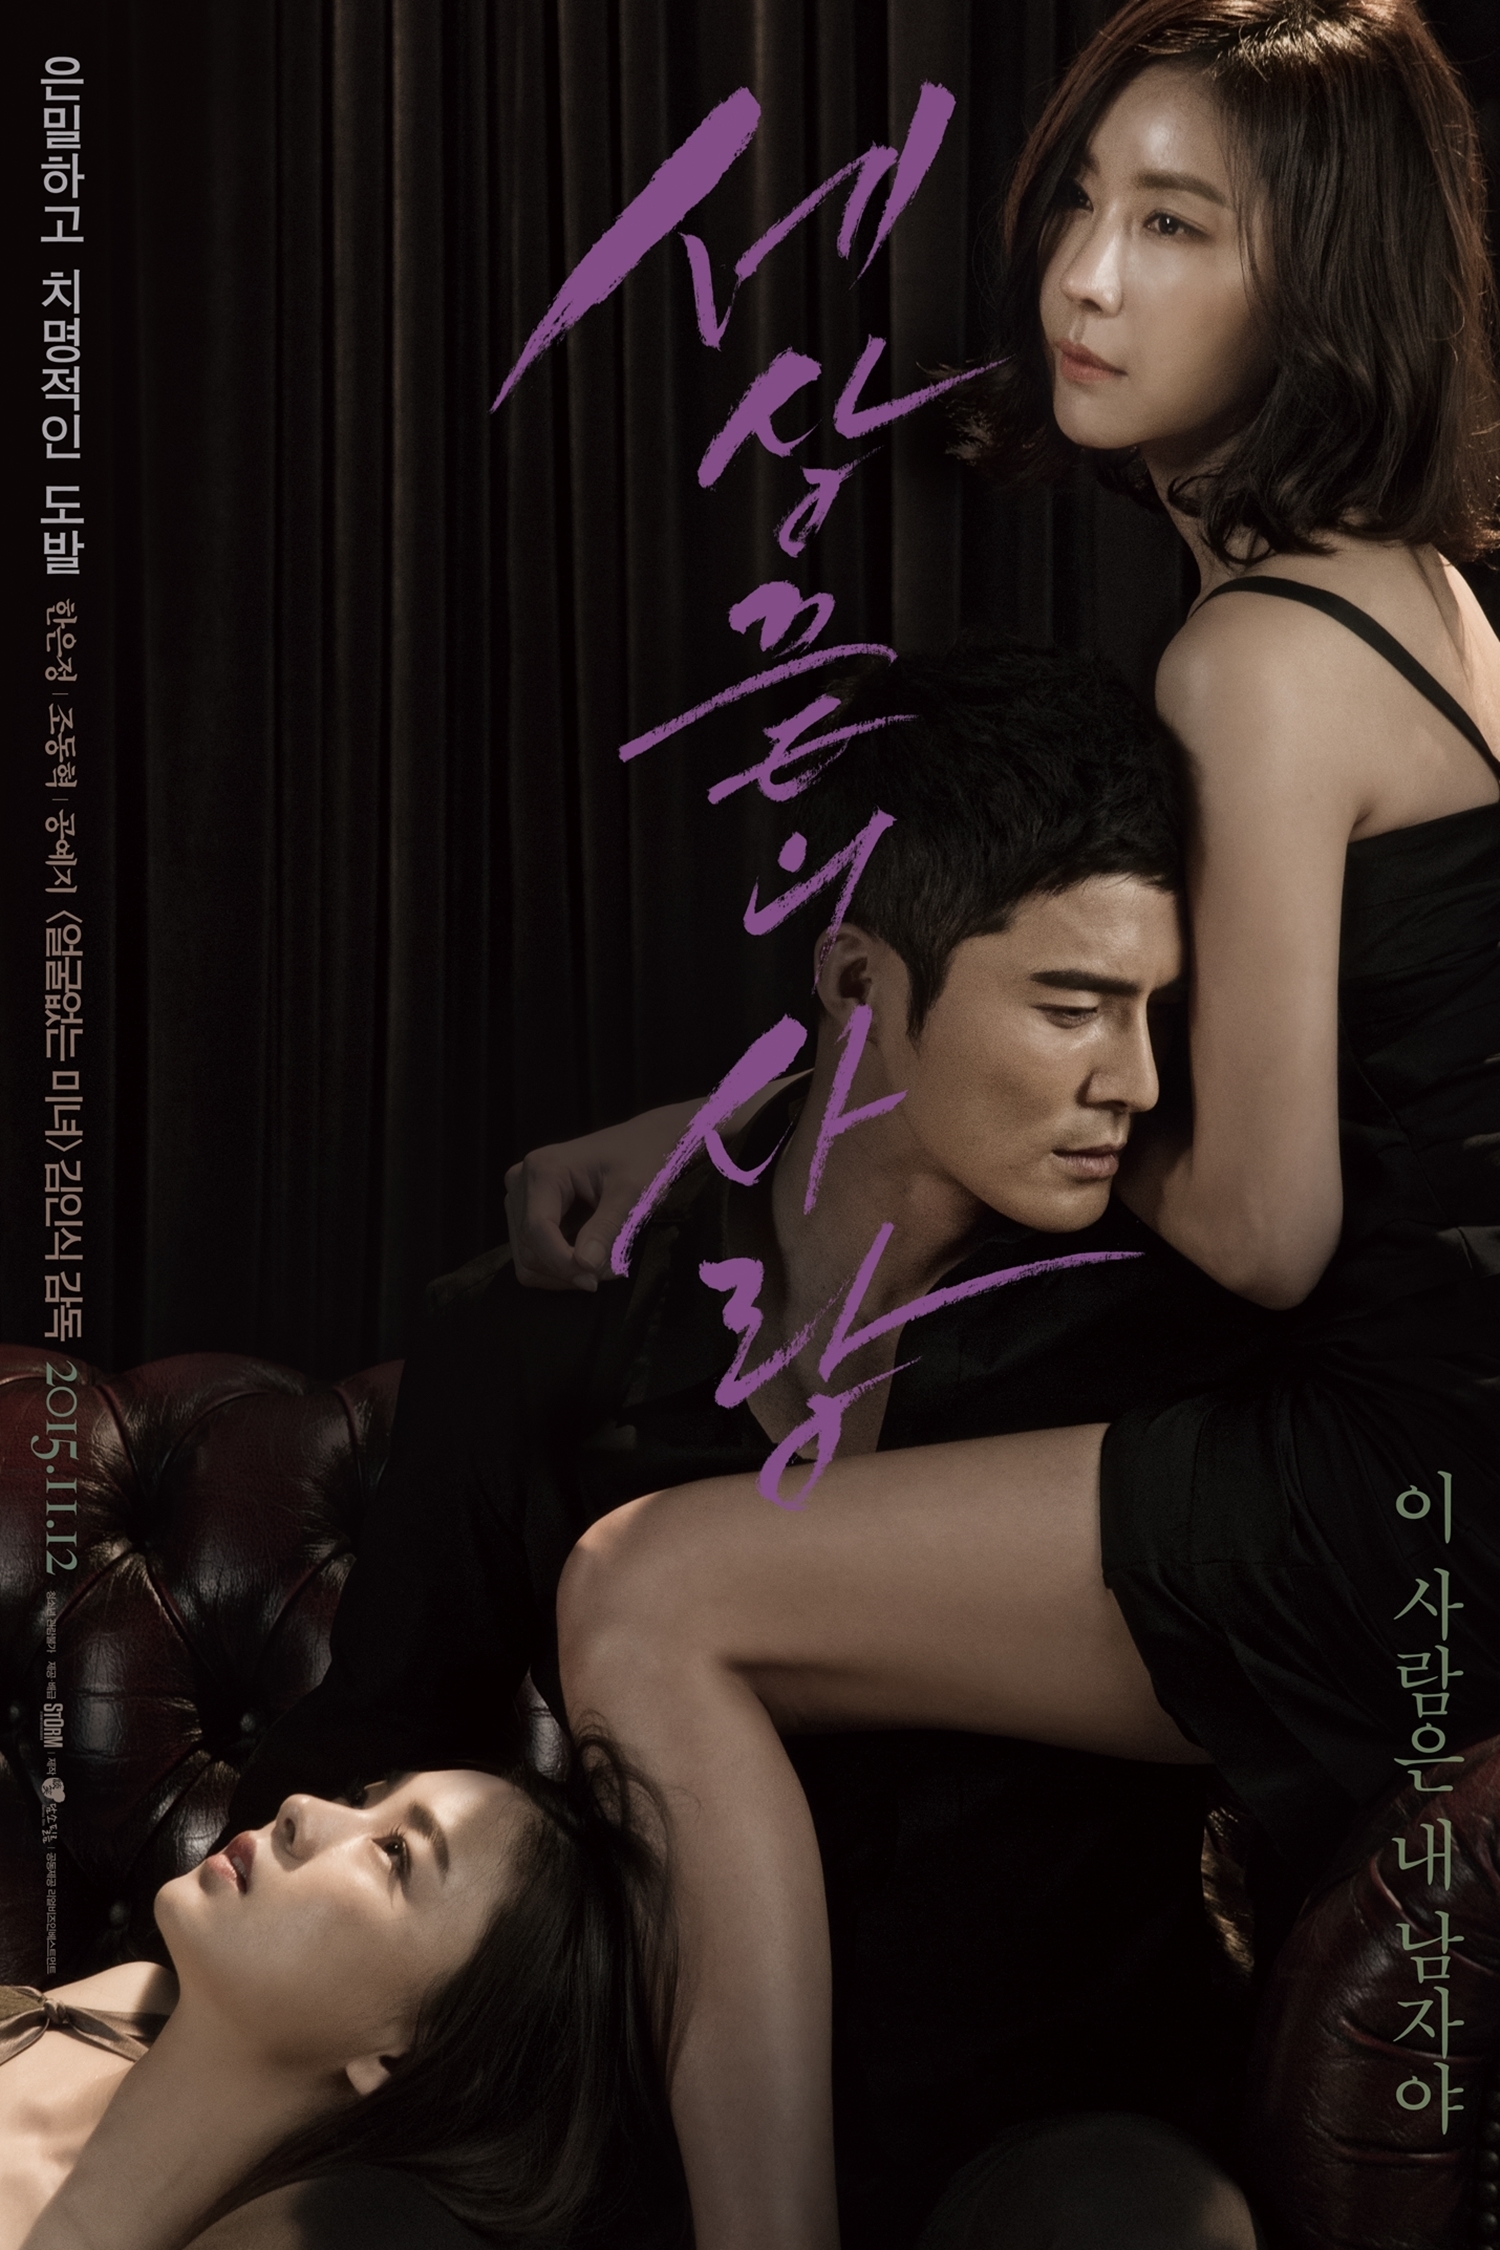 angela racalla recommends Korean Hot Movies List 2015